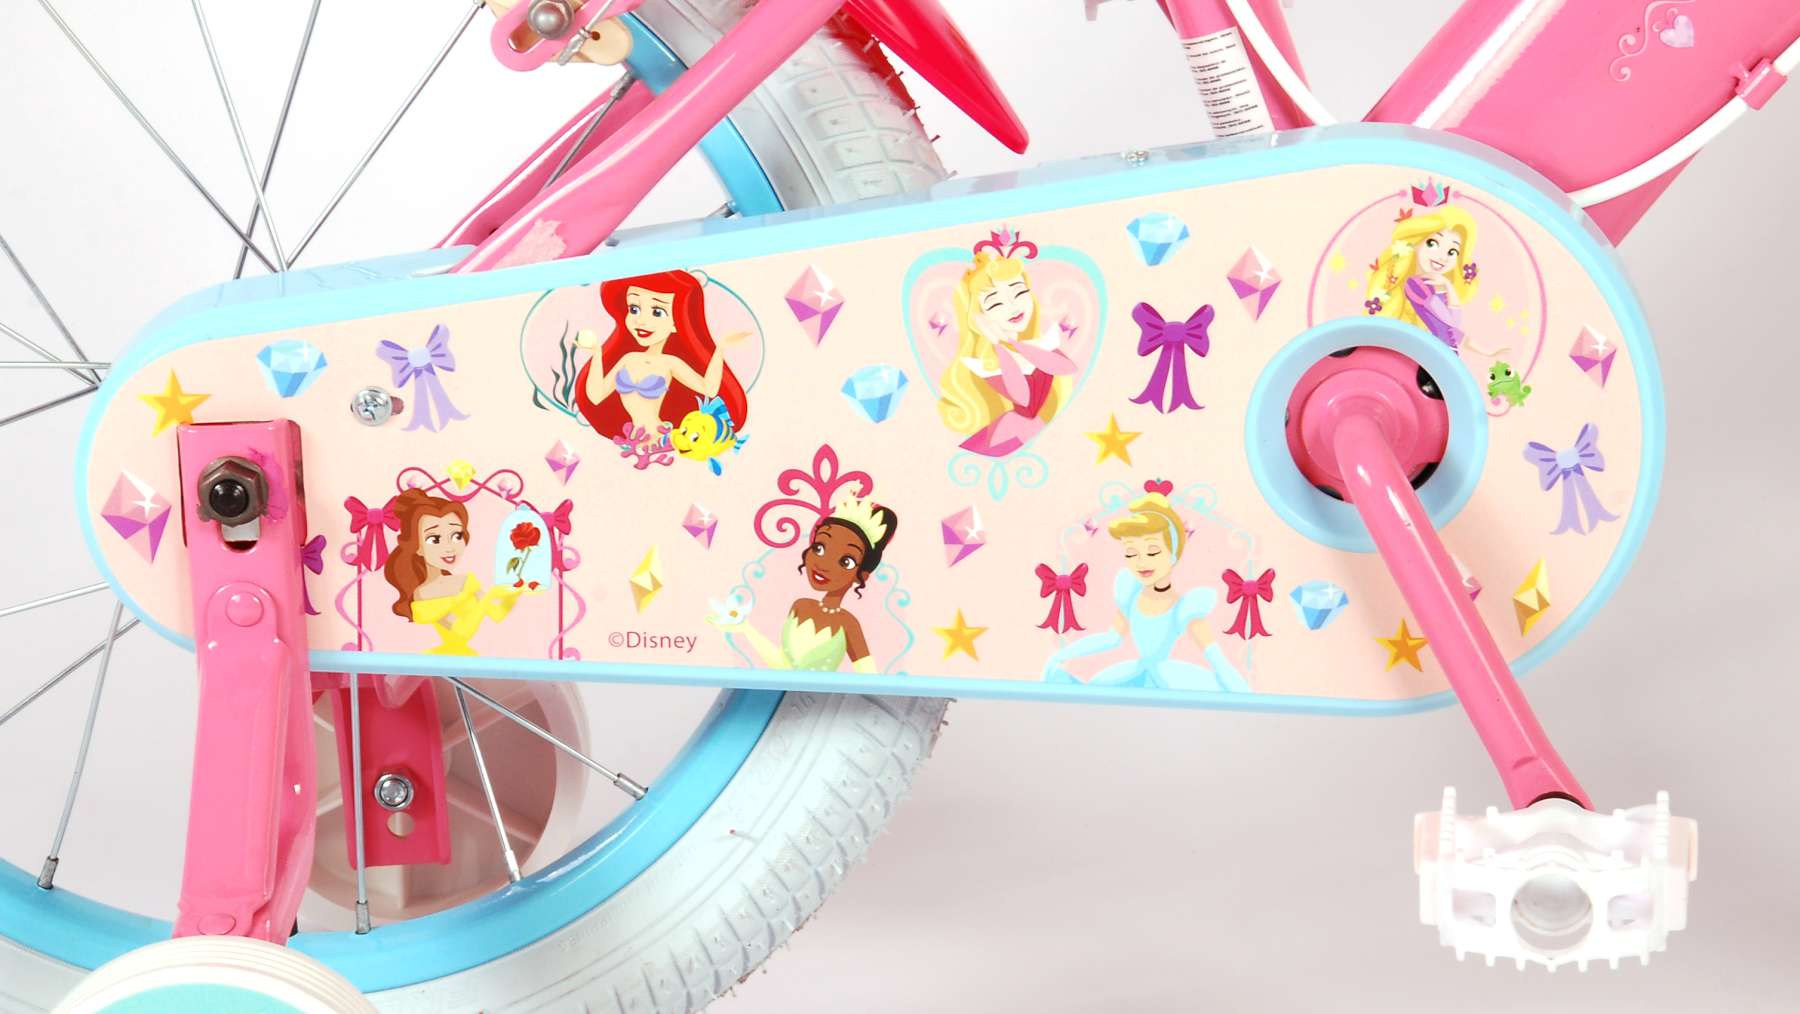 Kinderfahrrad Disney Princess für Mädchen 16 Zoll Kinderrad in Rosa